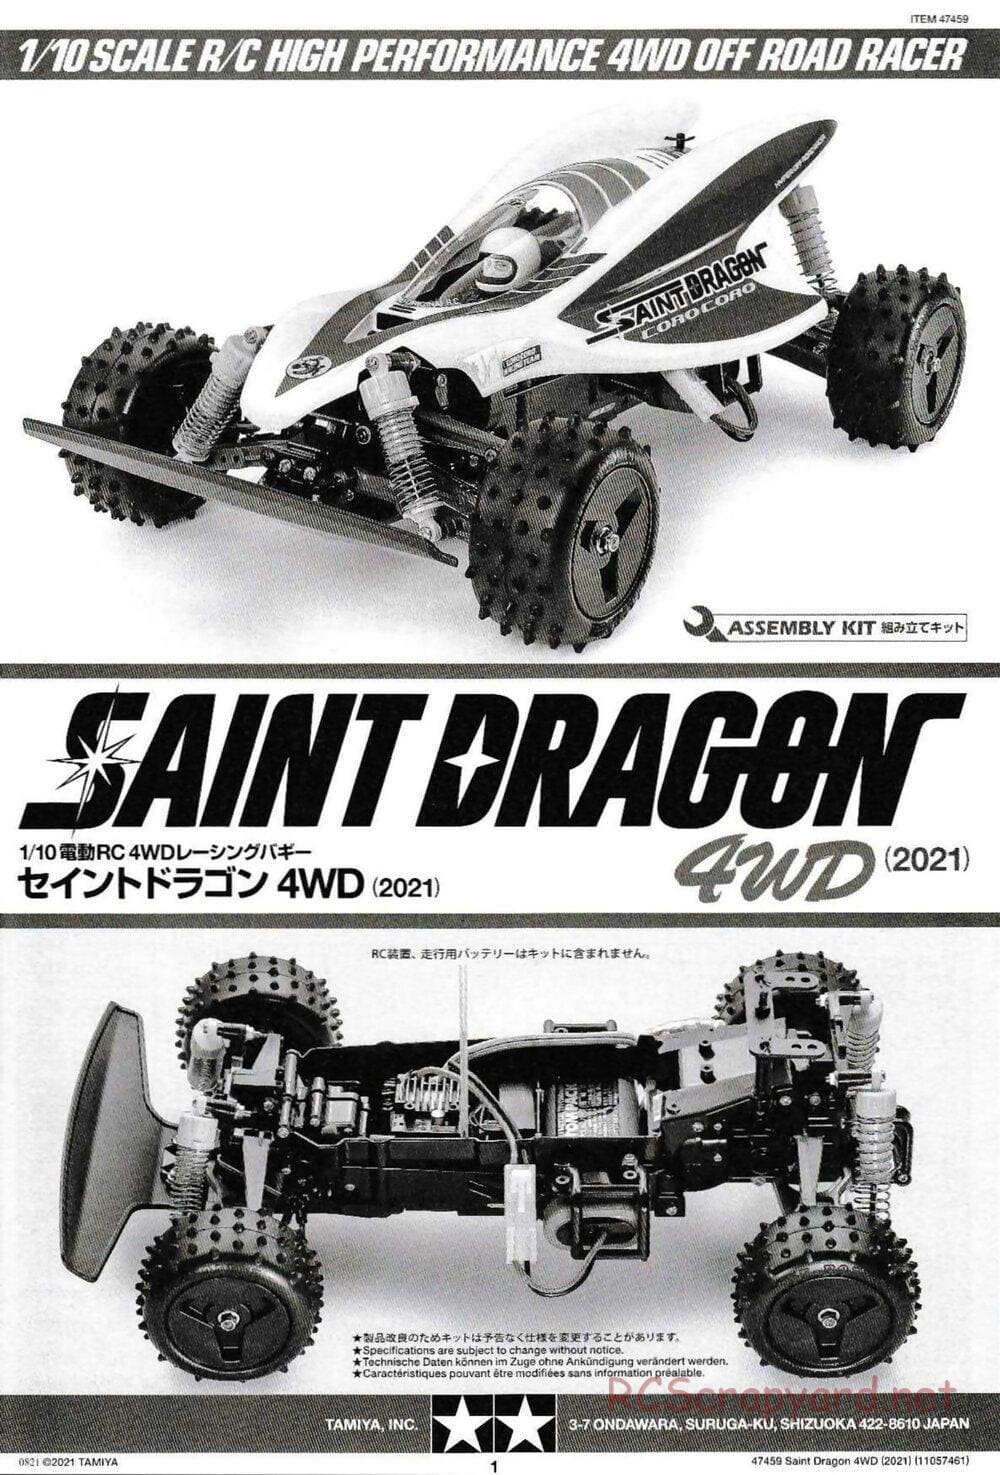 Tamiya - Saint Dragon (2021) Chassis - Manual - Page 1